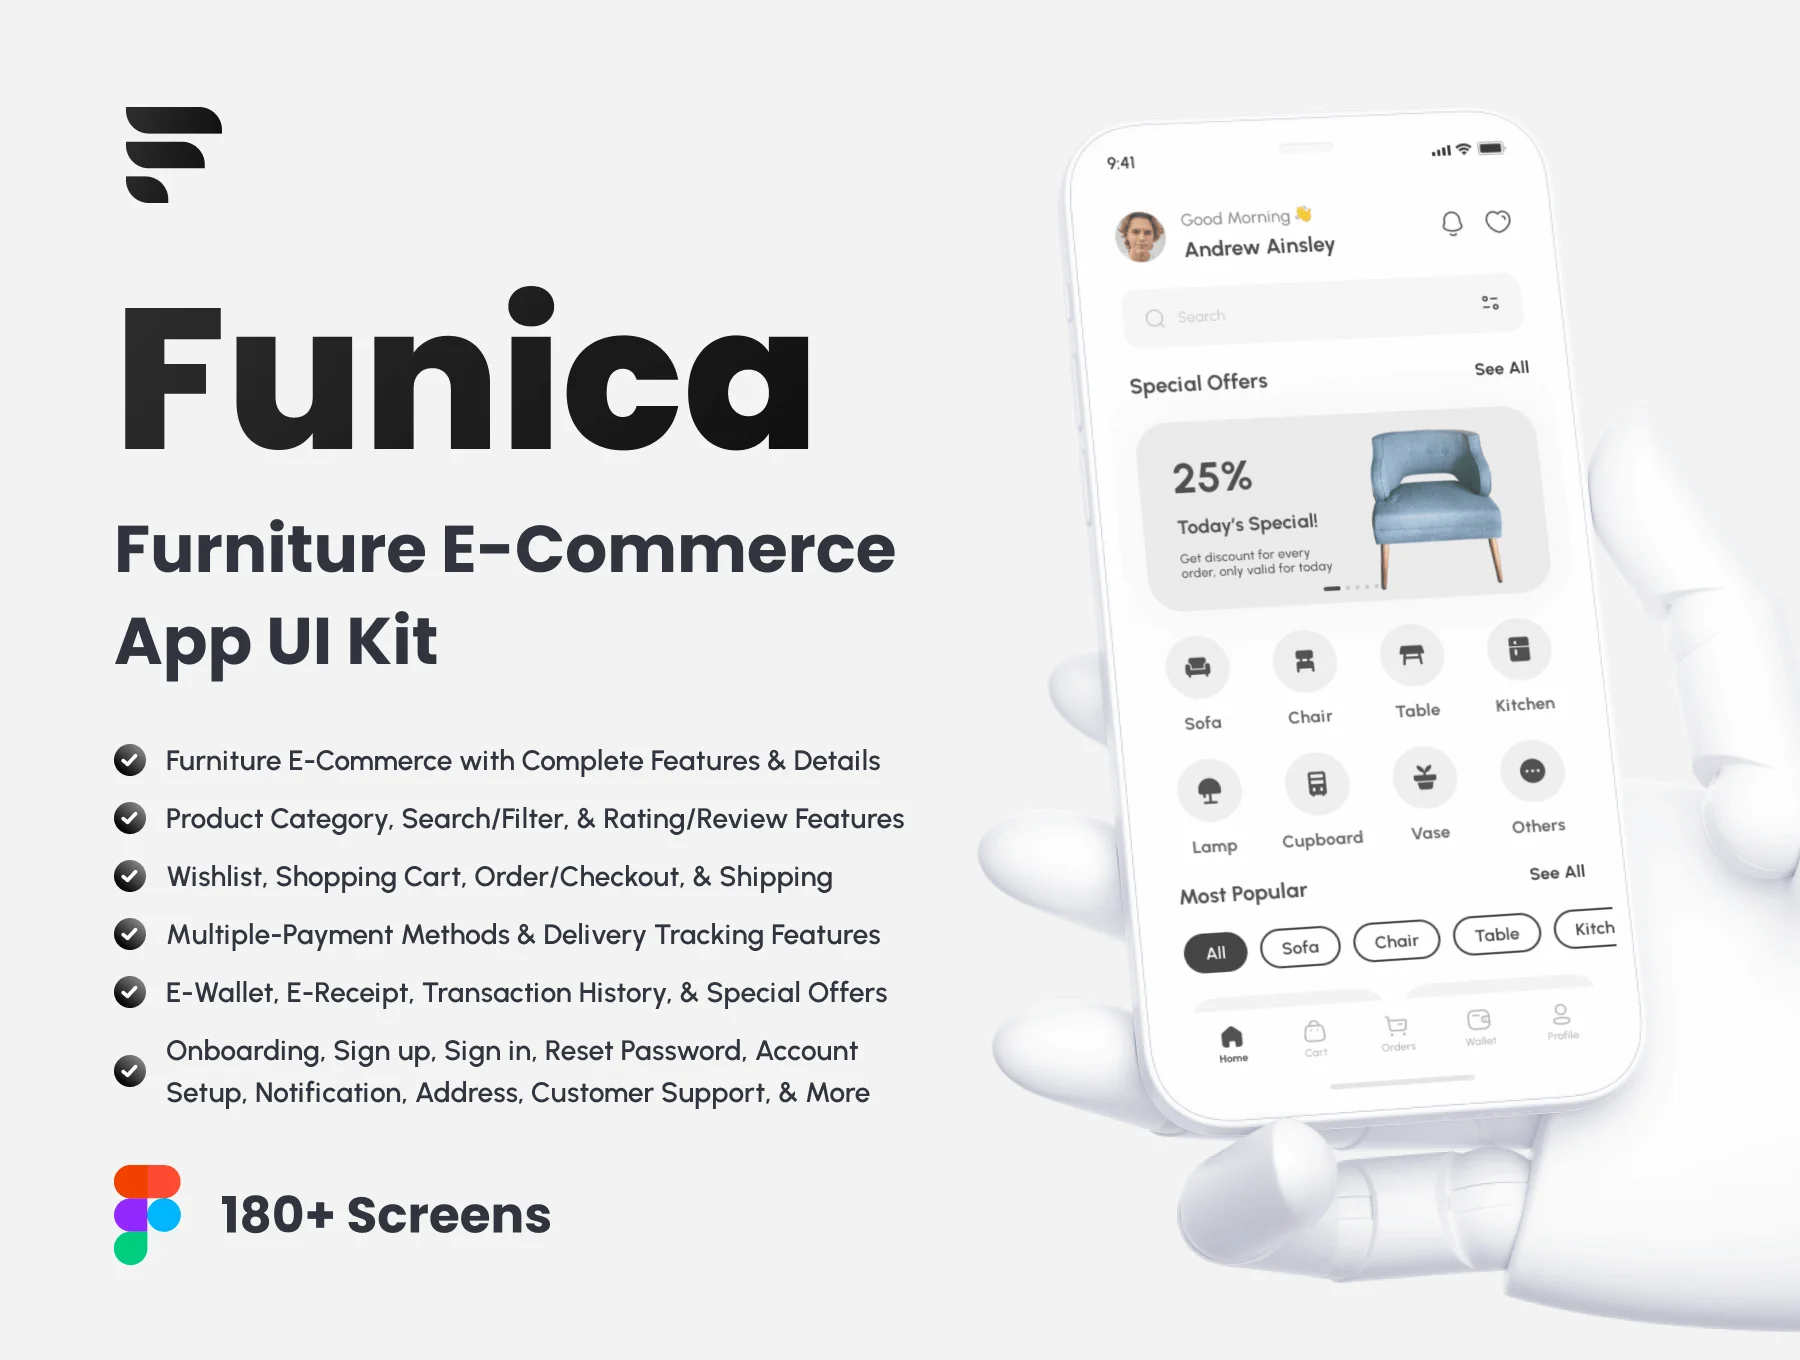 [VIP] Funica: Furniture E-Commerce App UI Kit